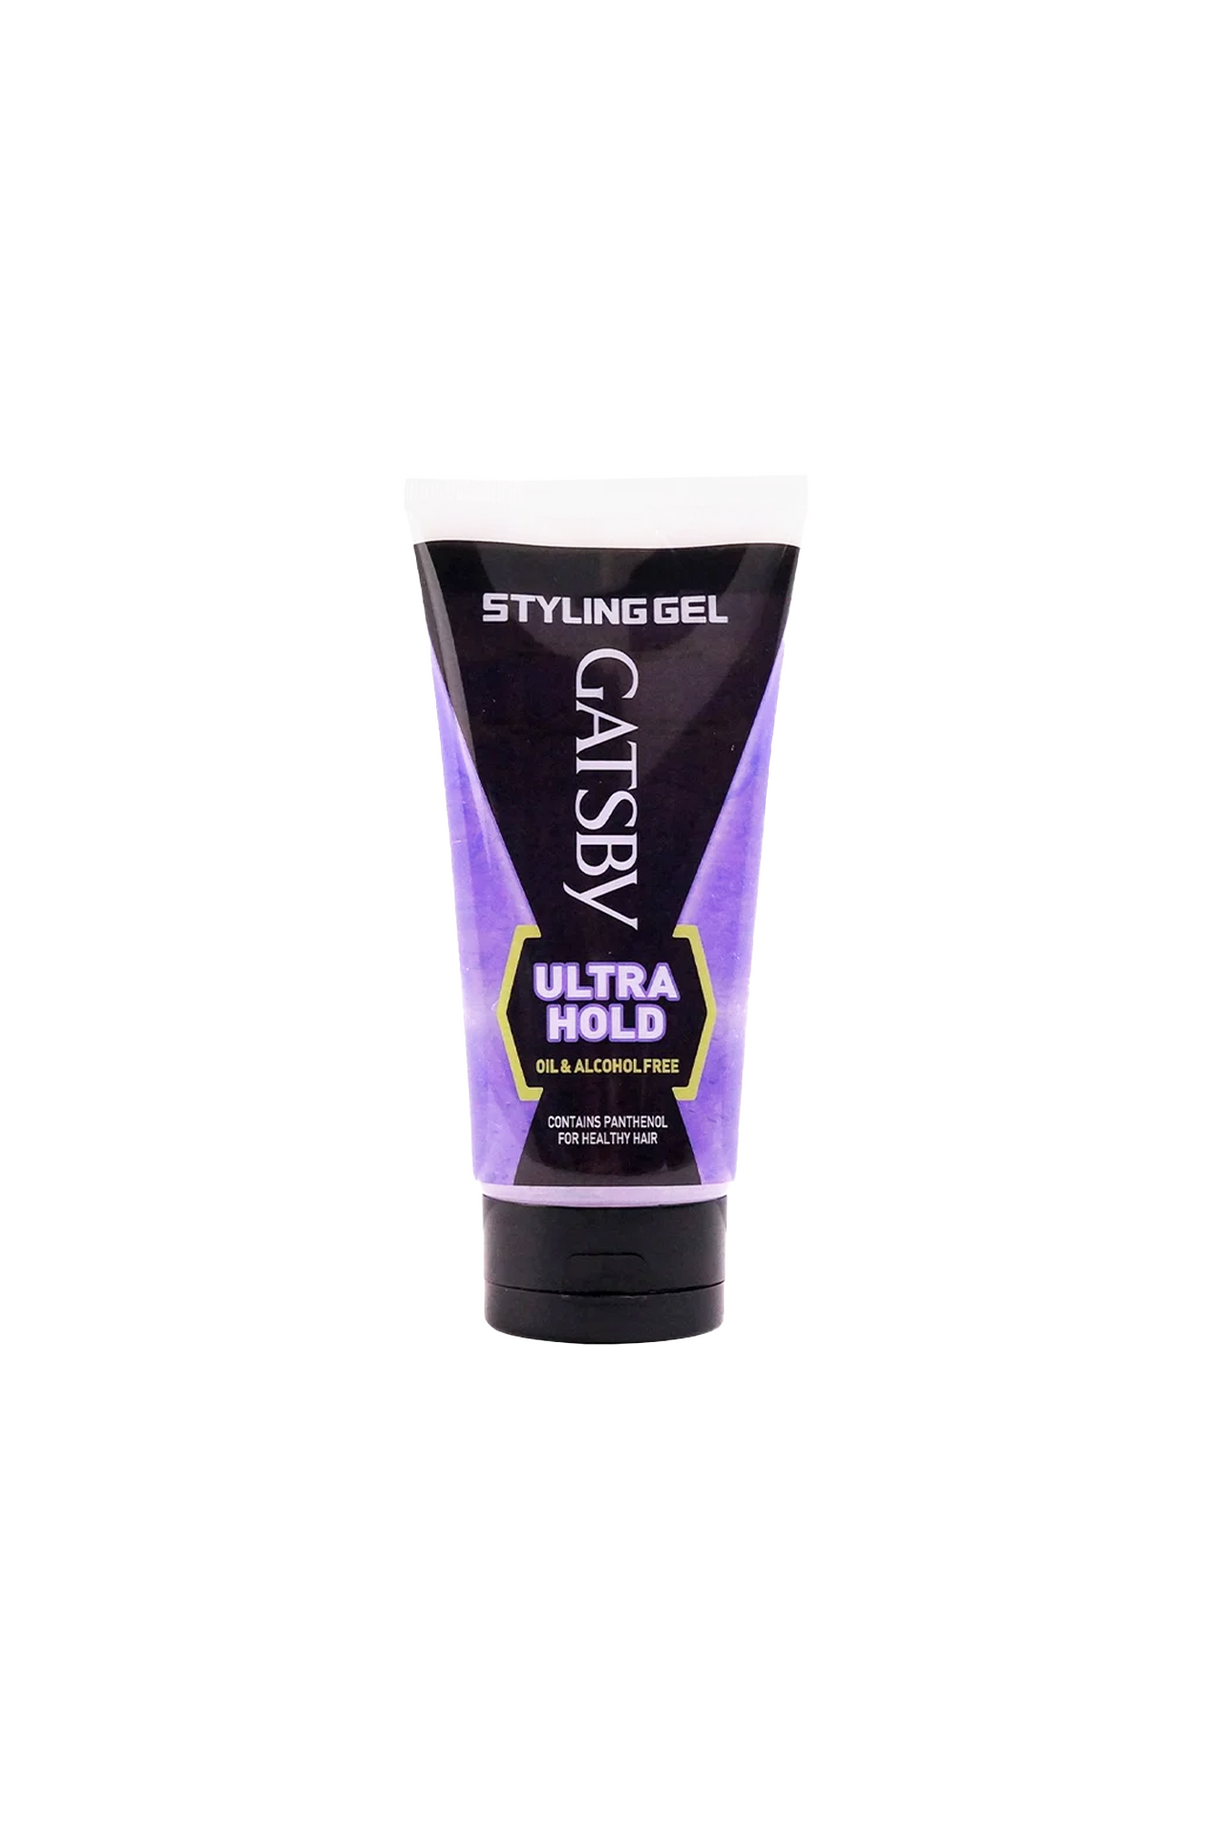 gatsby hair gel ultra hold 150g